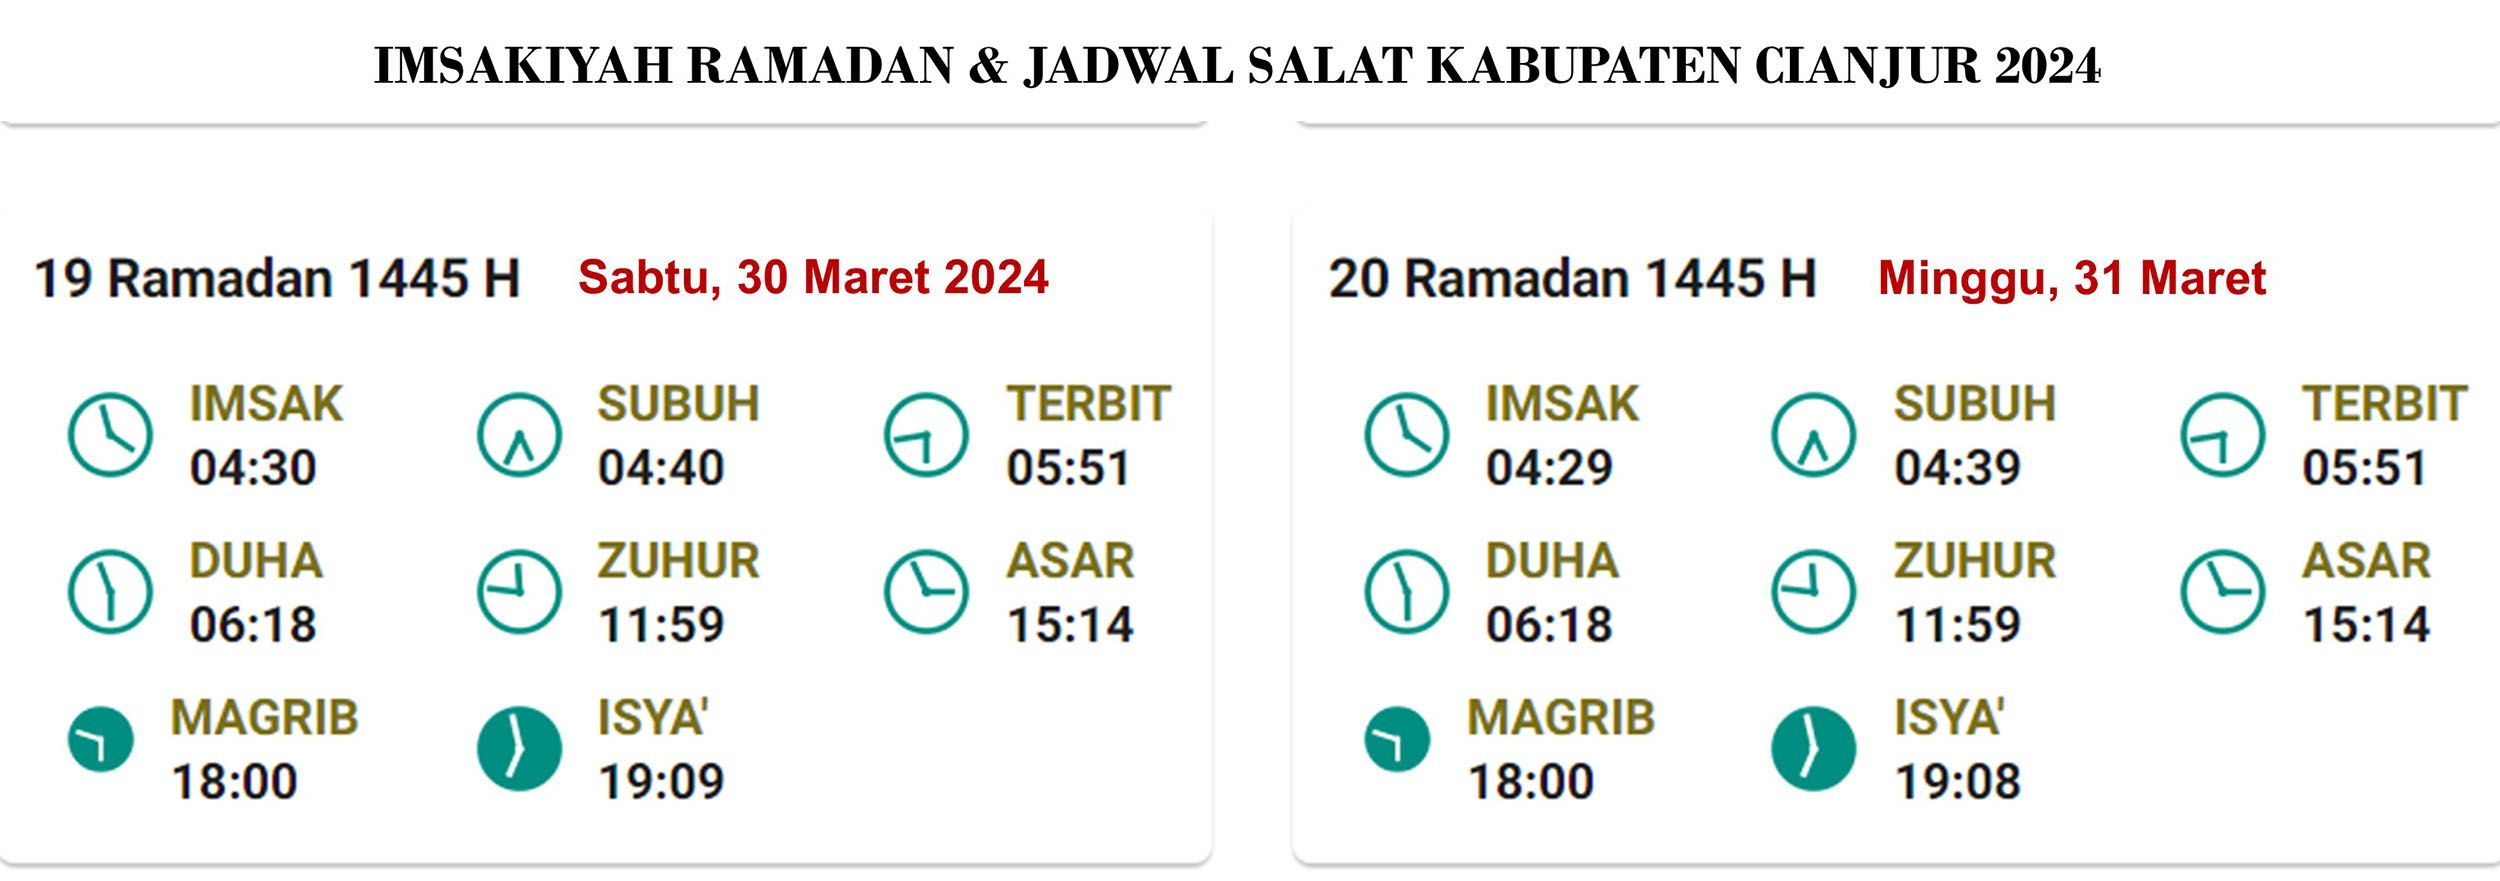 Cianjur, Jadwal Imsakiyah dan Salat, Minggu, 31 Maret 2024 